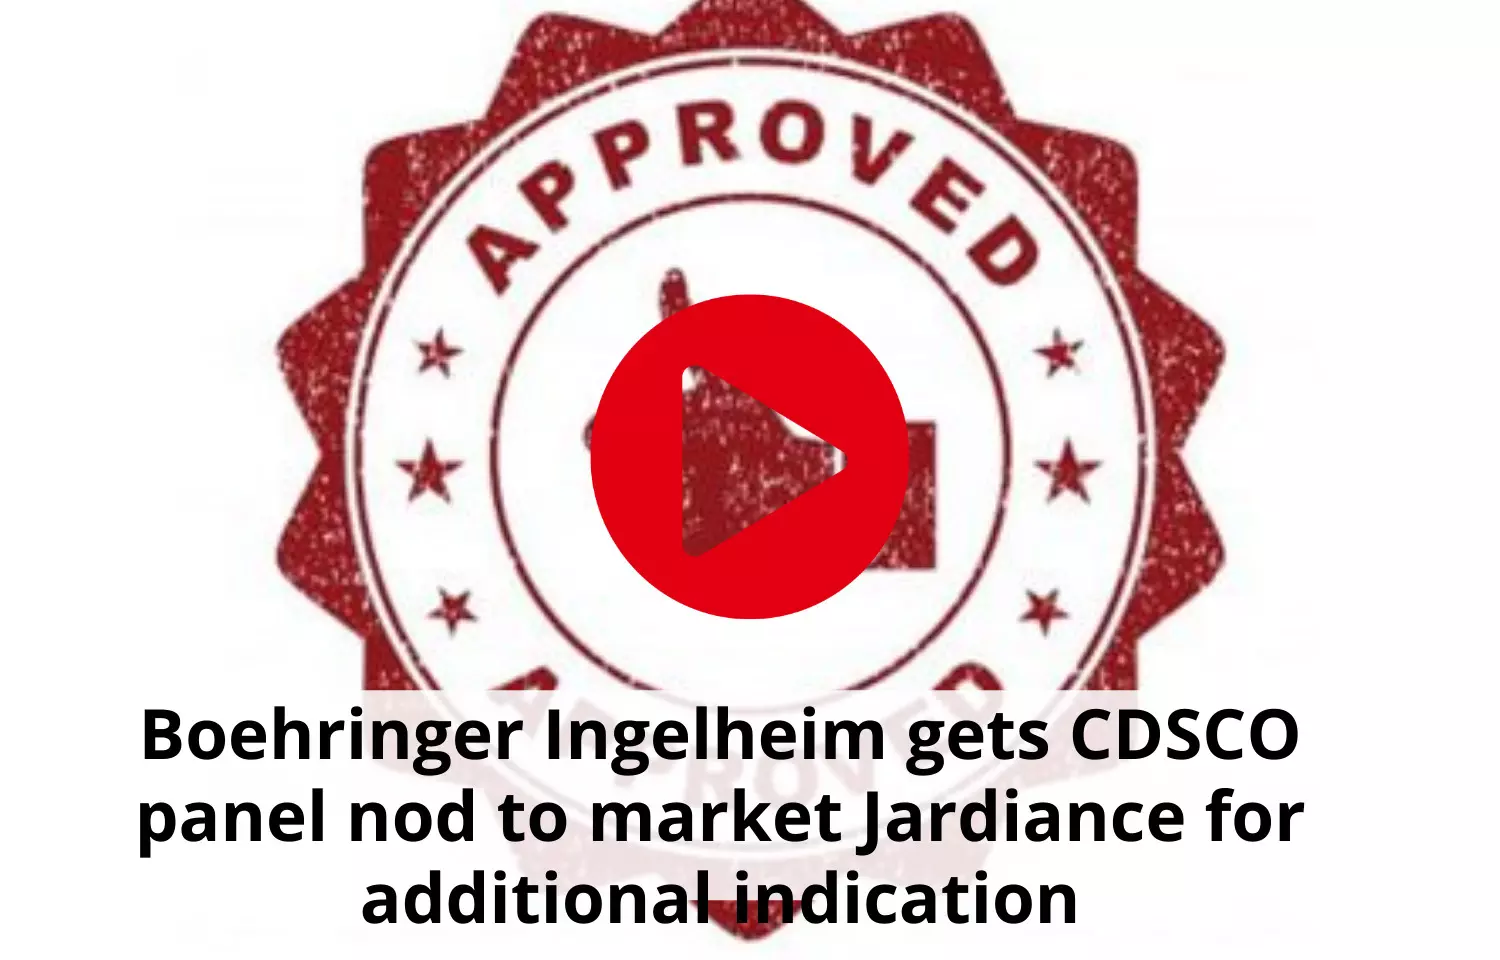 Boehringer Ingelheim gets CDSCO panel nod to market Jardiance for additional indication